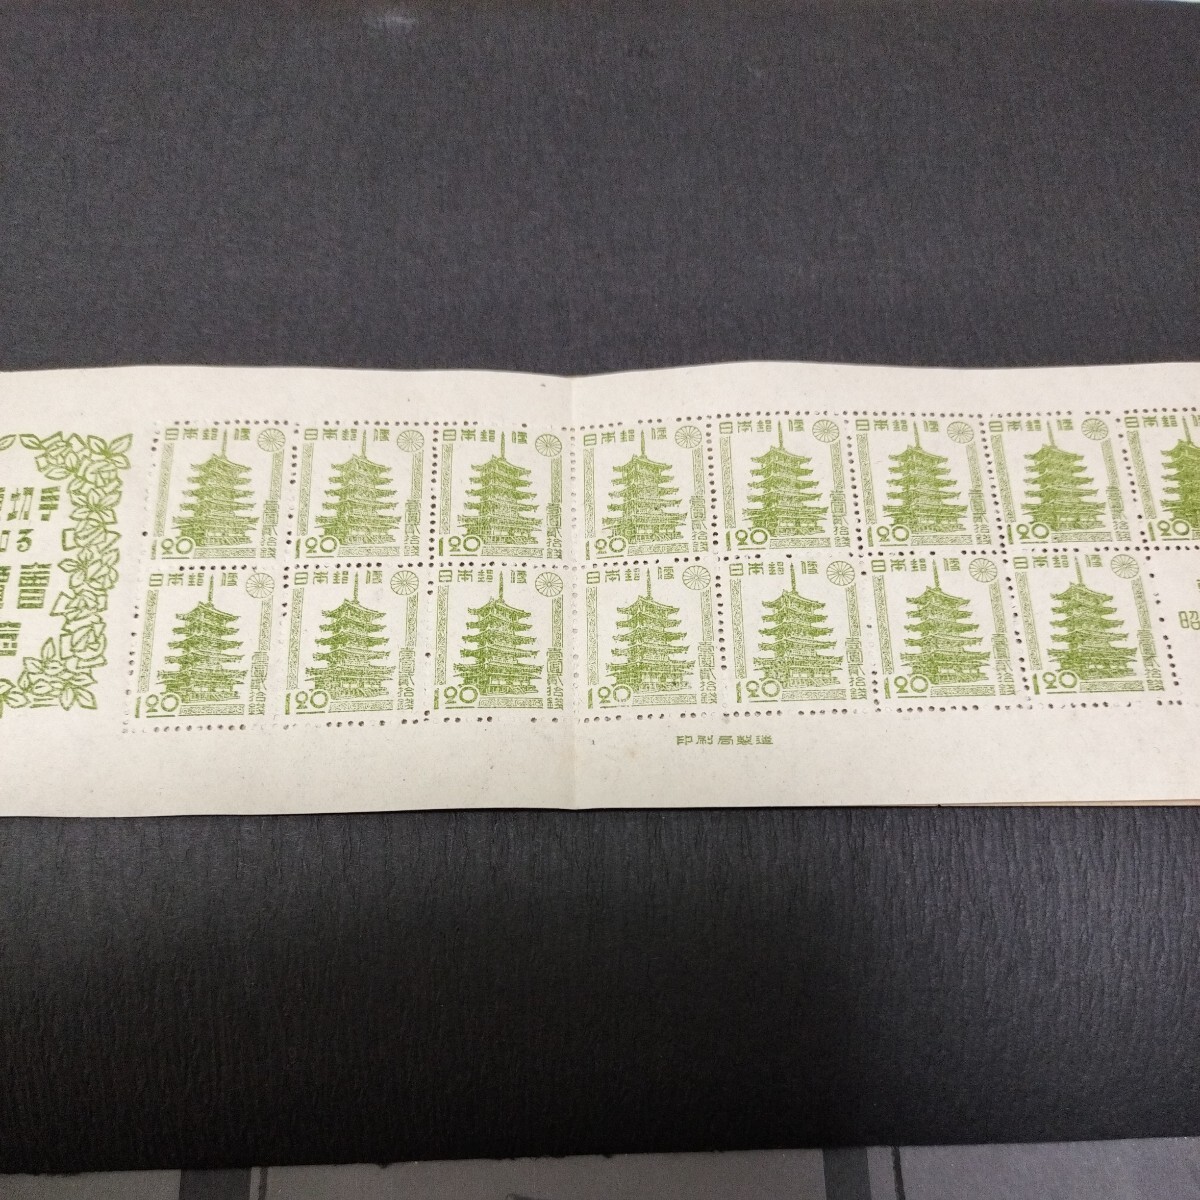 東京切手展記念 小型シート 未使用 昭和22年 郵便切手を知る展覧会記念 の画像1